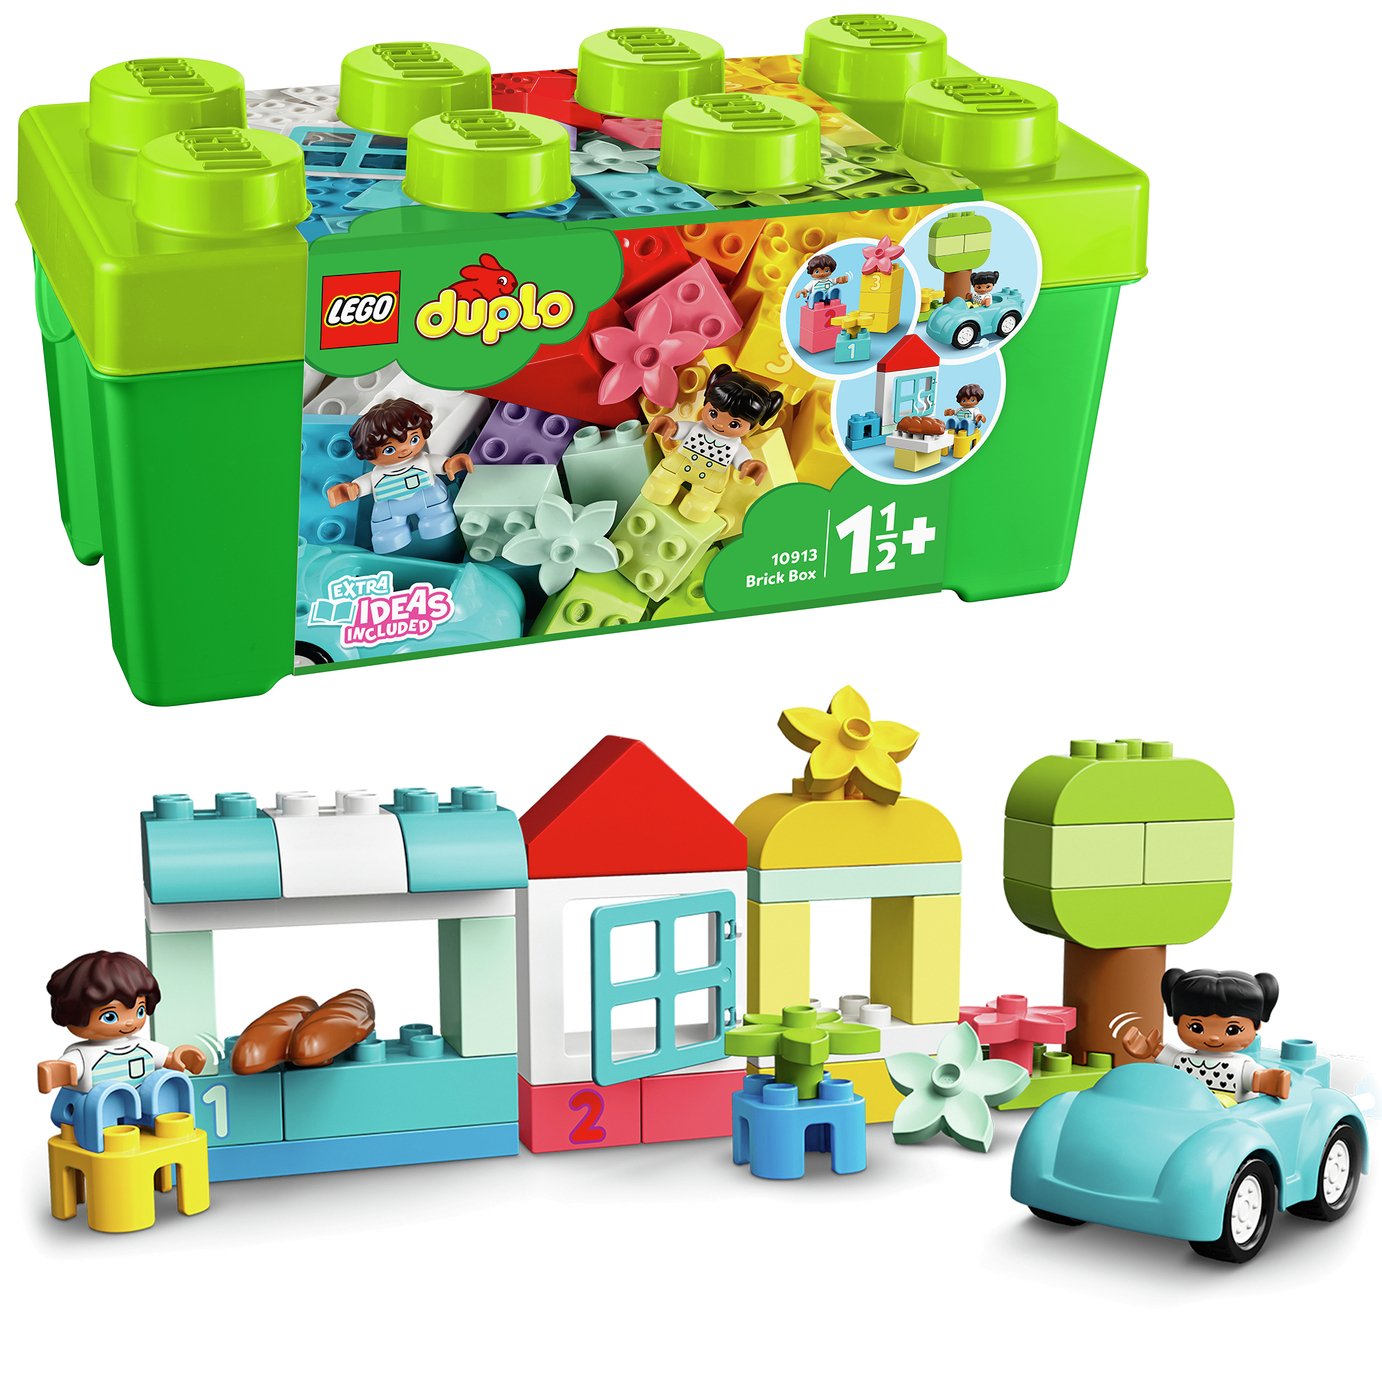 Buy LEGO DUPLO Brick Box - 10913 | LEGO 